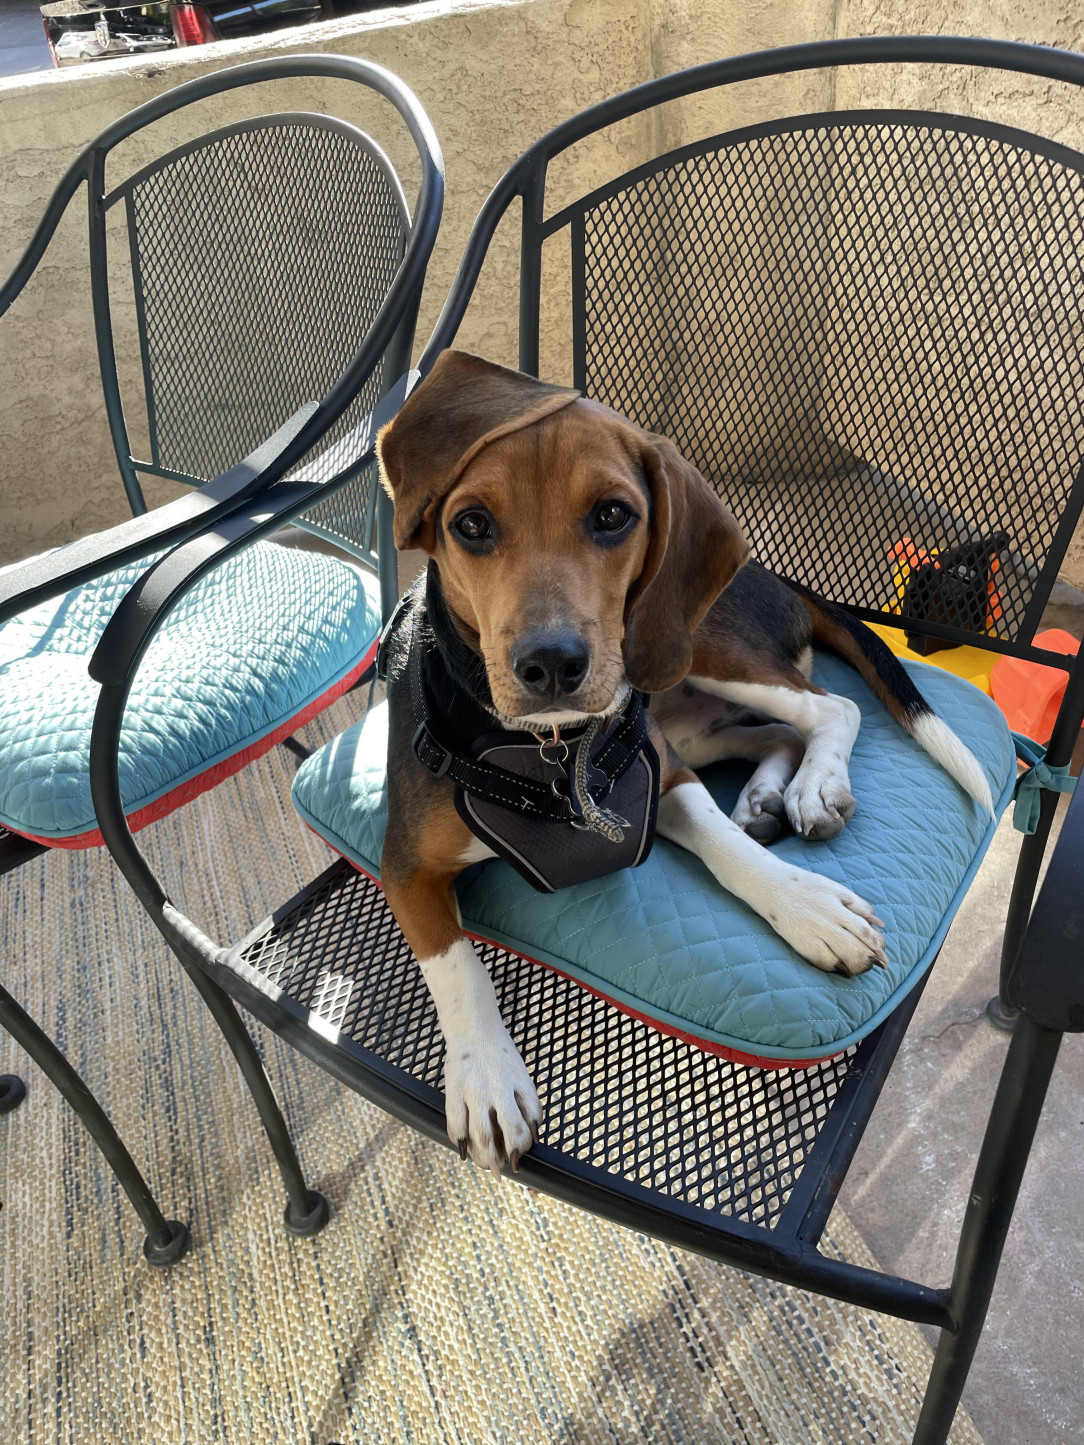 Doggy Fedora? Or just a beagle ear?